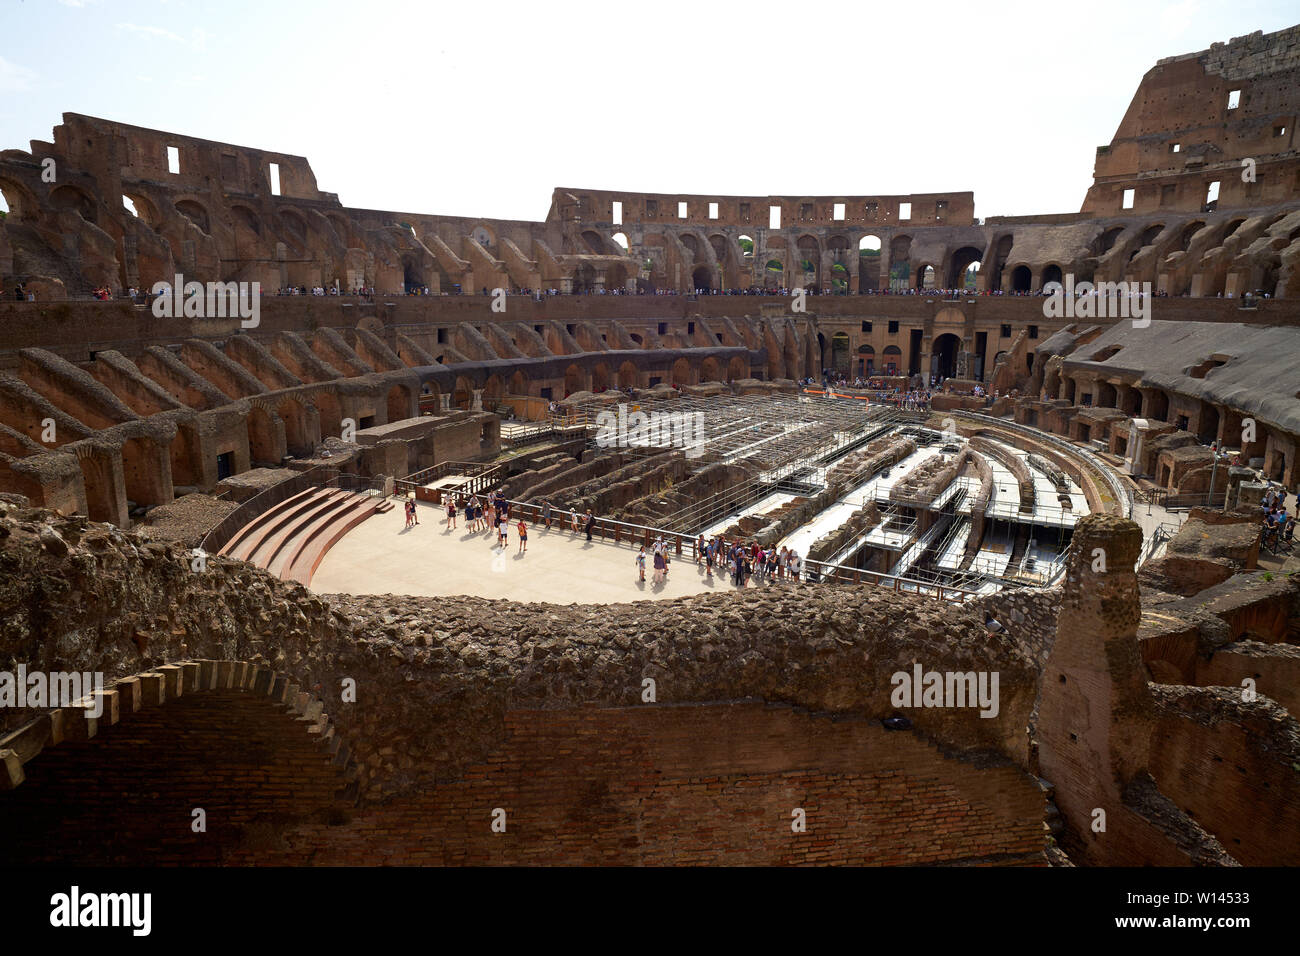 The Colosseum in Rome Stock Photo